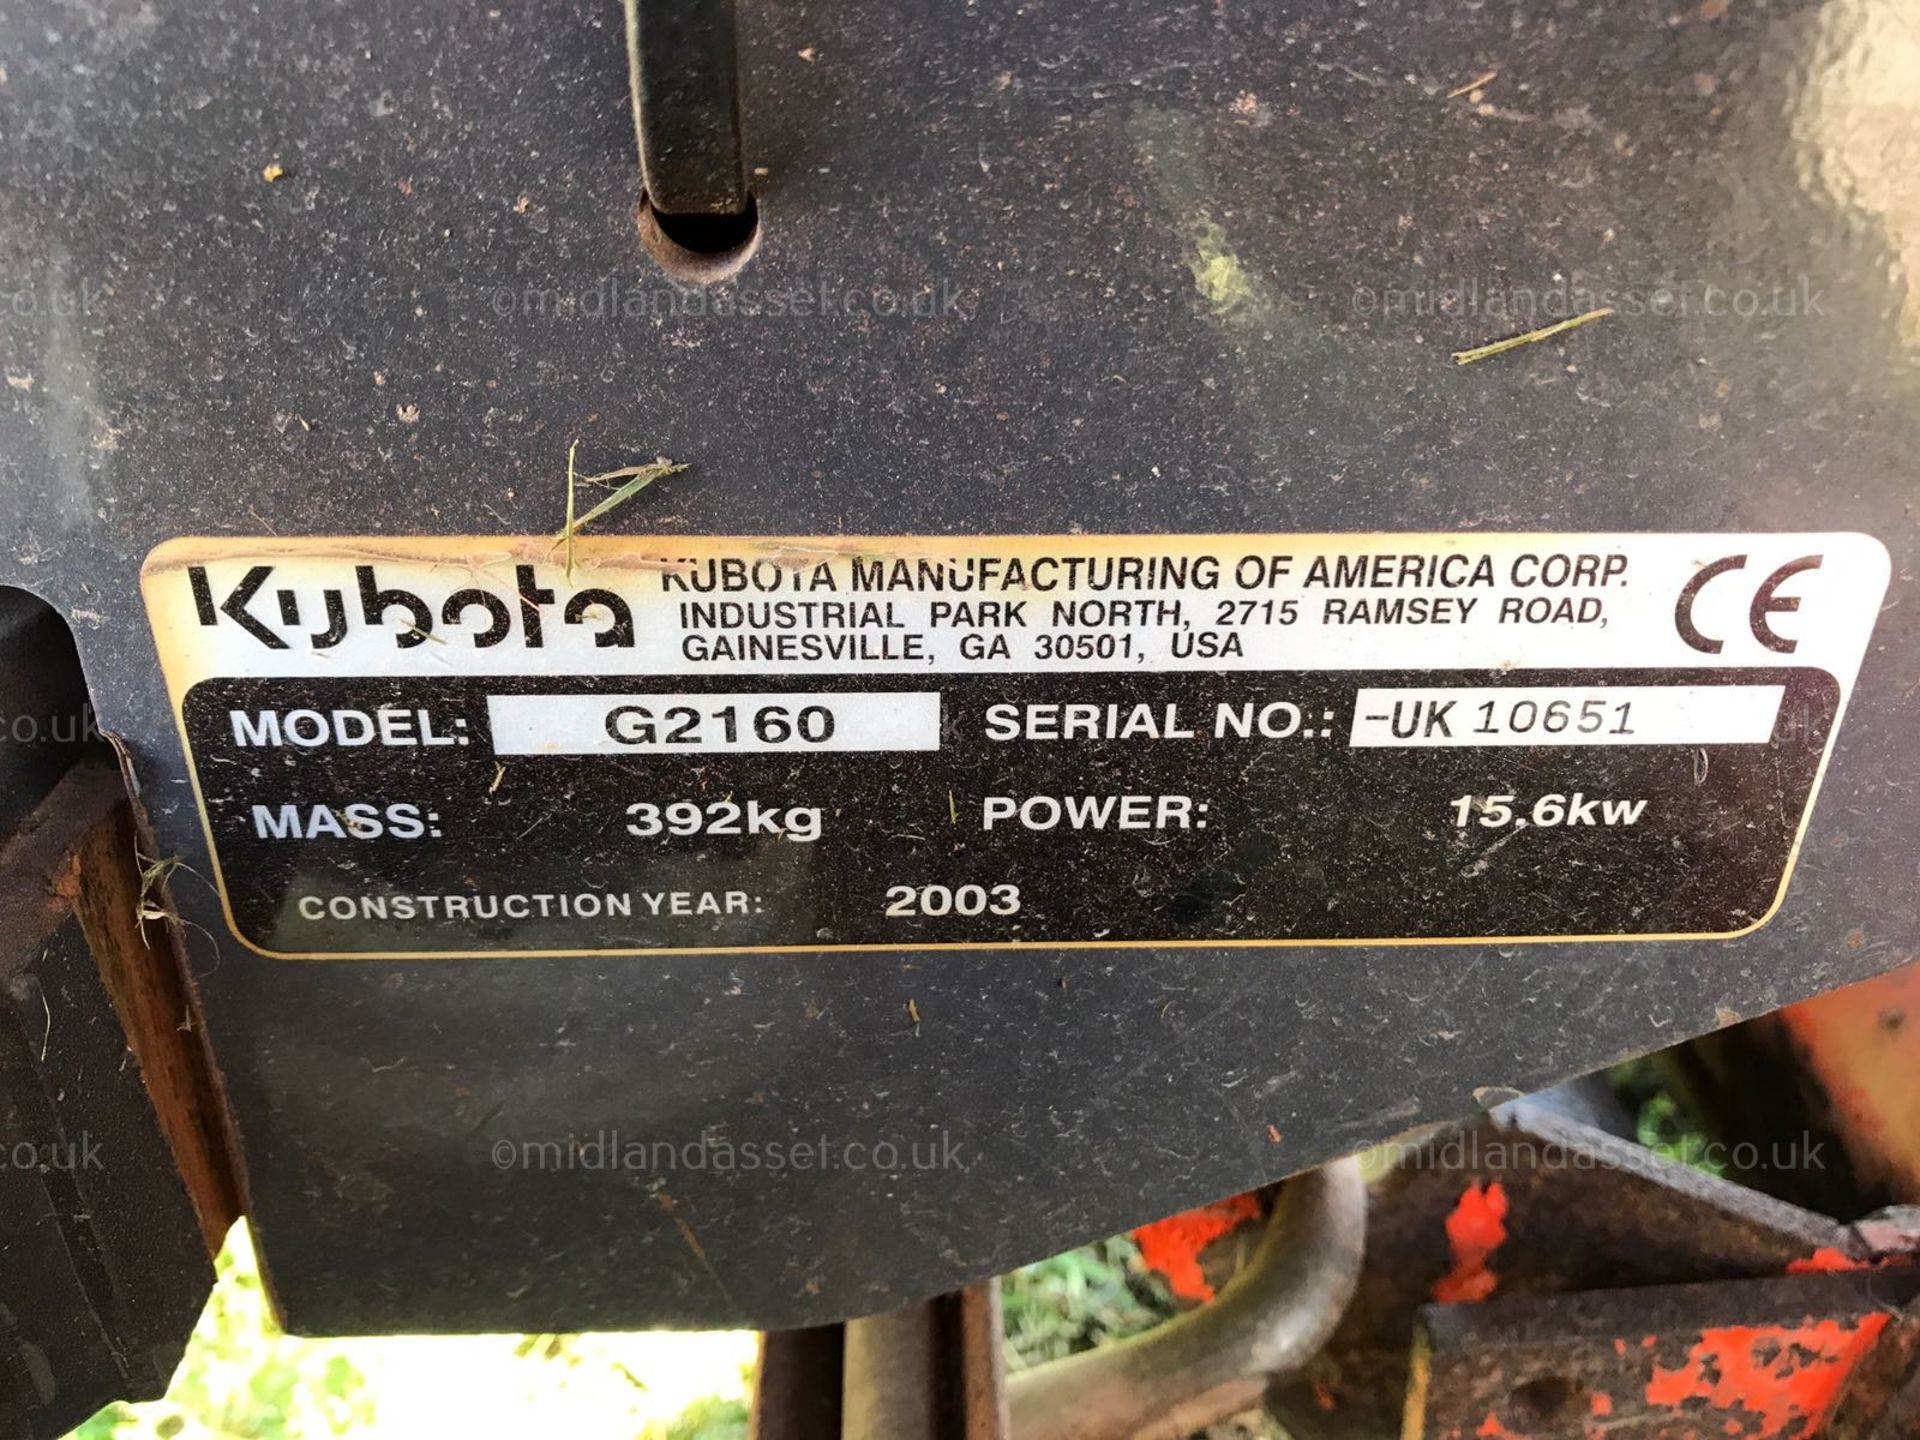 2003 KUBOTA G2160 RIDE ON MOWER - Image 7 of 7